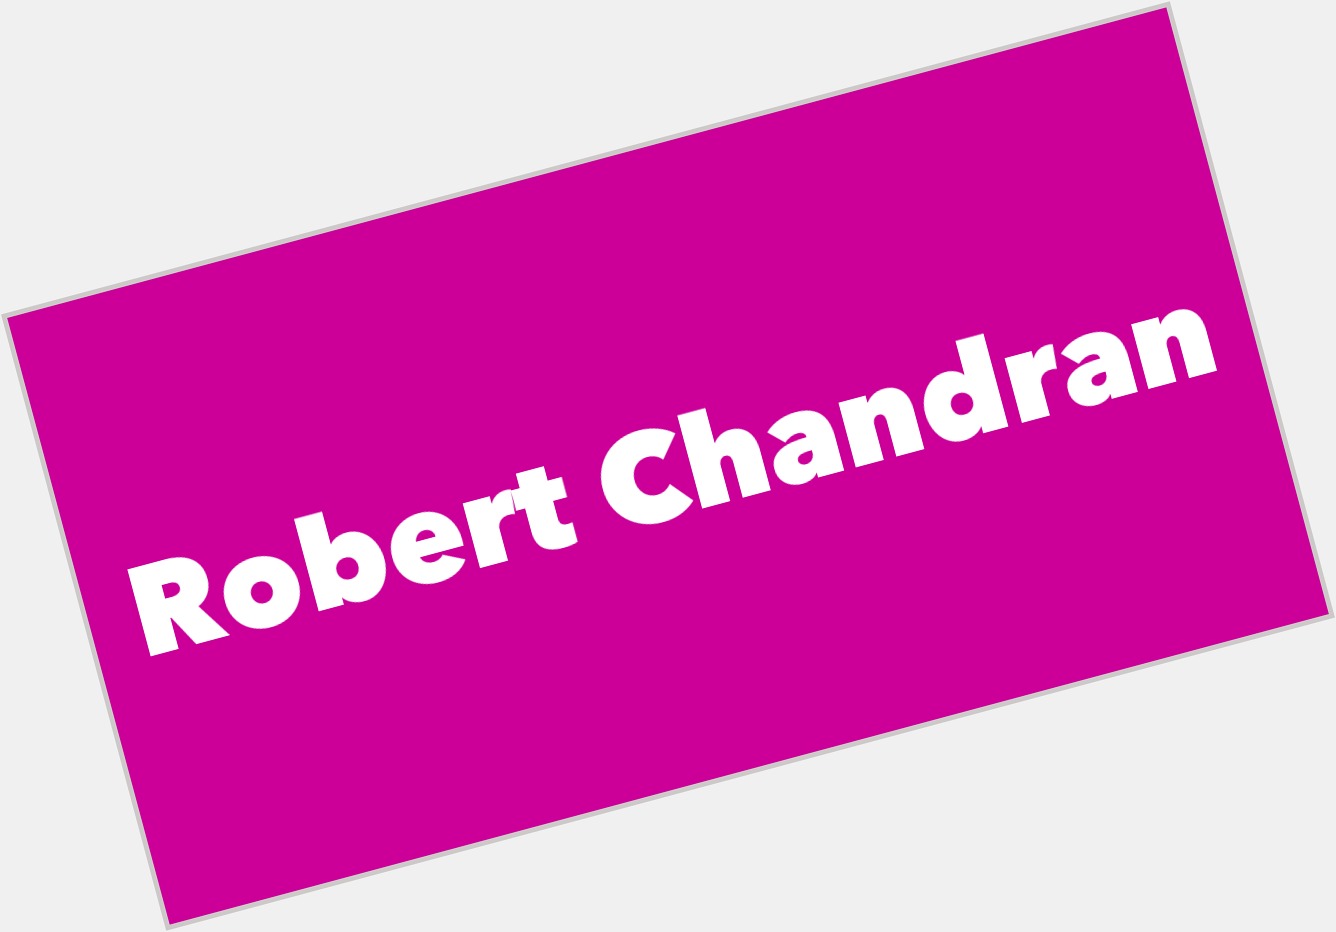 Robert Chandran new pic 1